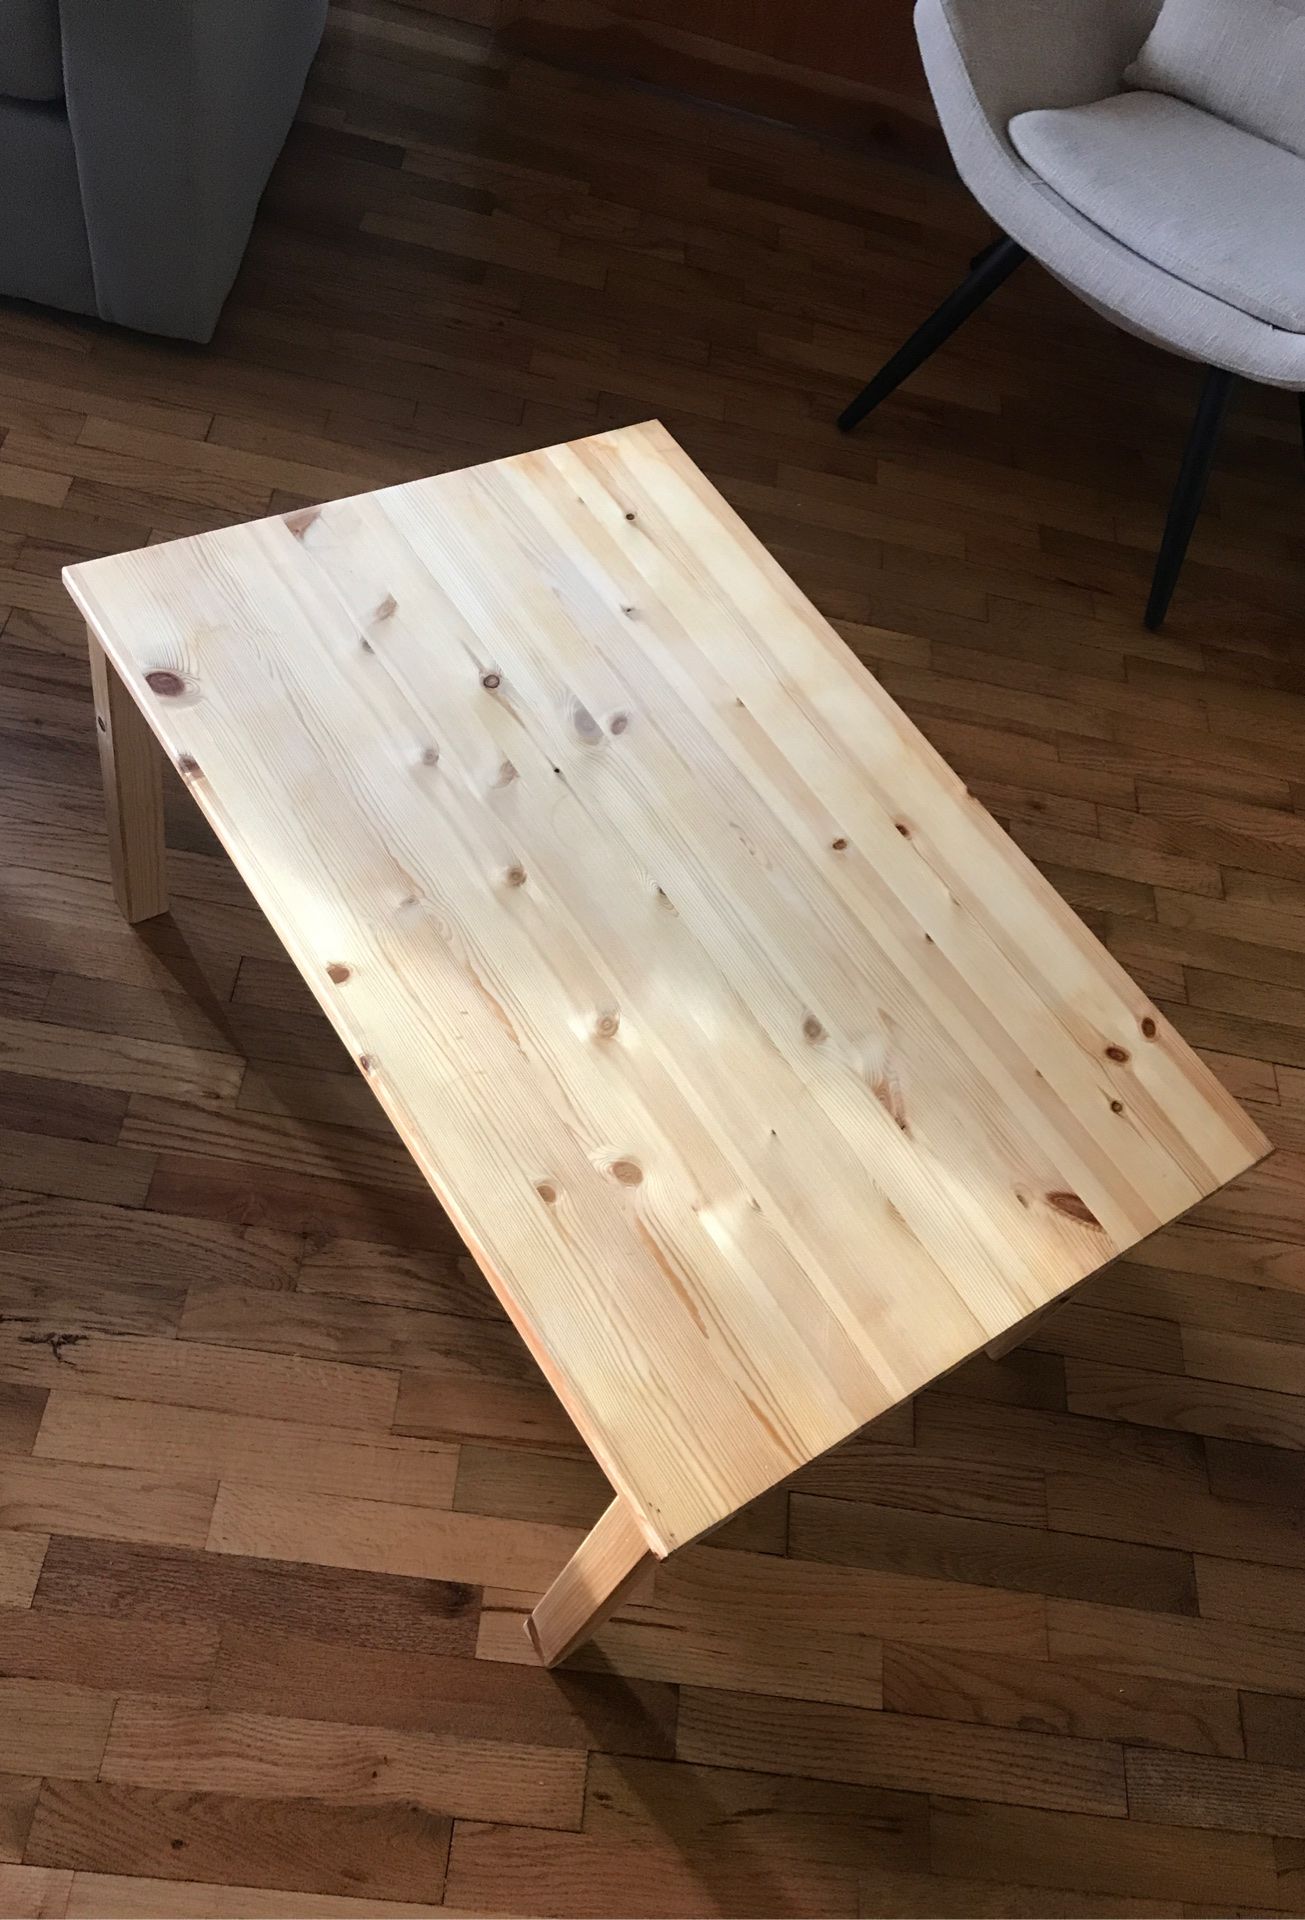 IKEA Coffee Table